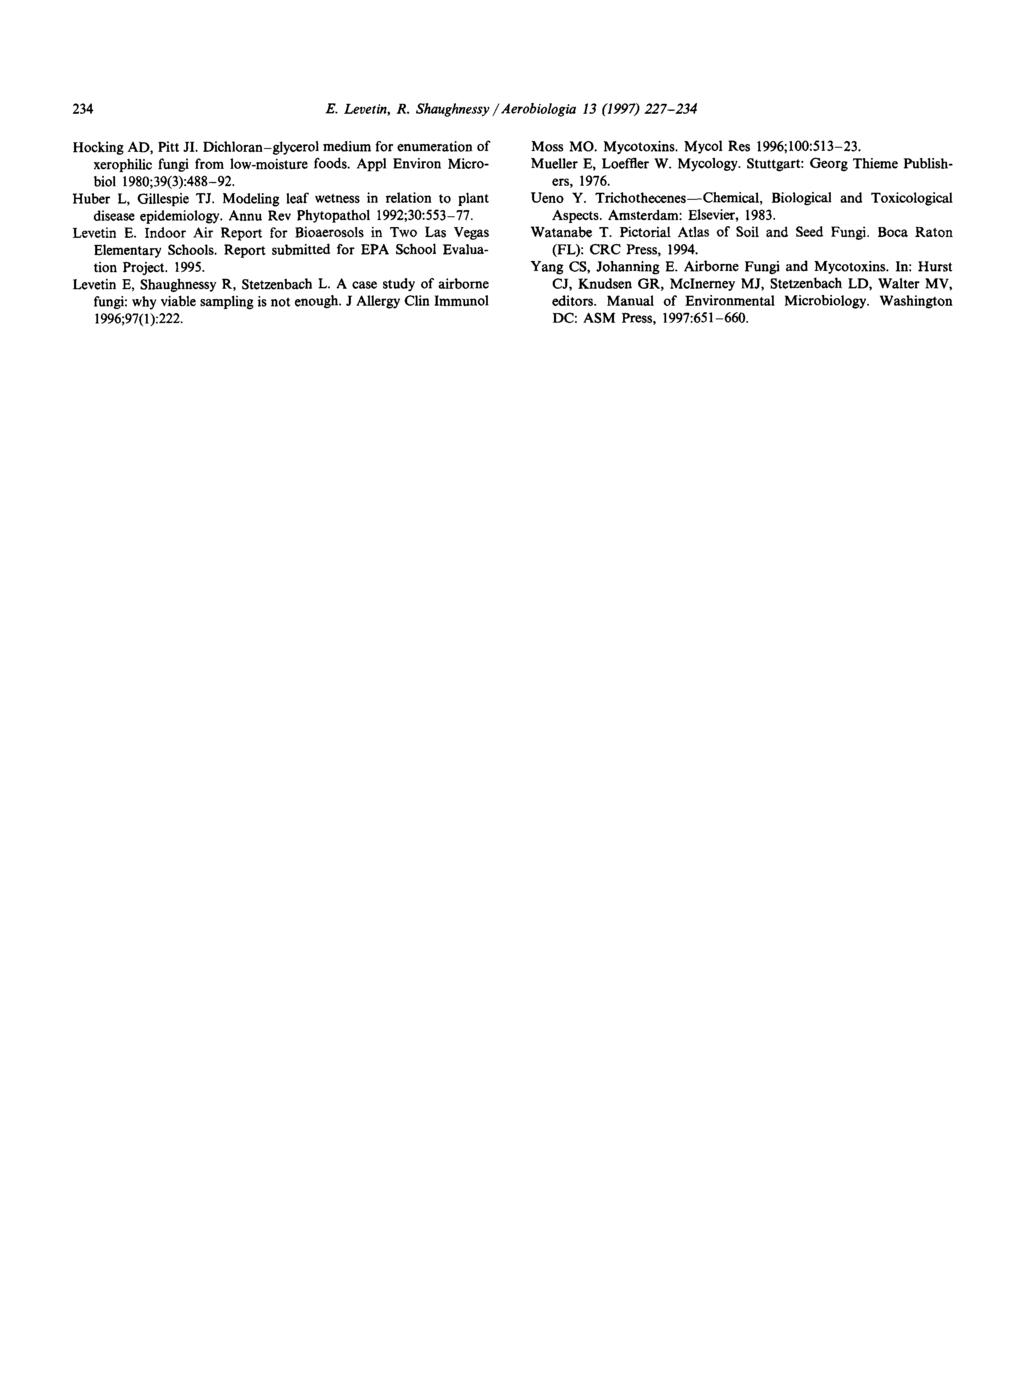 234 E. Levetin, R. Shaughnessy / Aerobiologia 13 (1997) 227-234 Hocking AD, Pitt JI. Dichloran-glycerol medium for enumeration of xerophilic fungi from low-moisture foods.